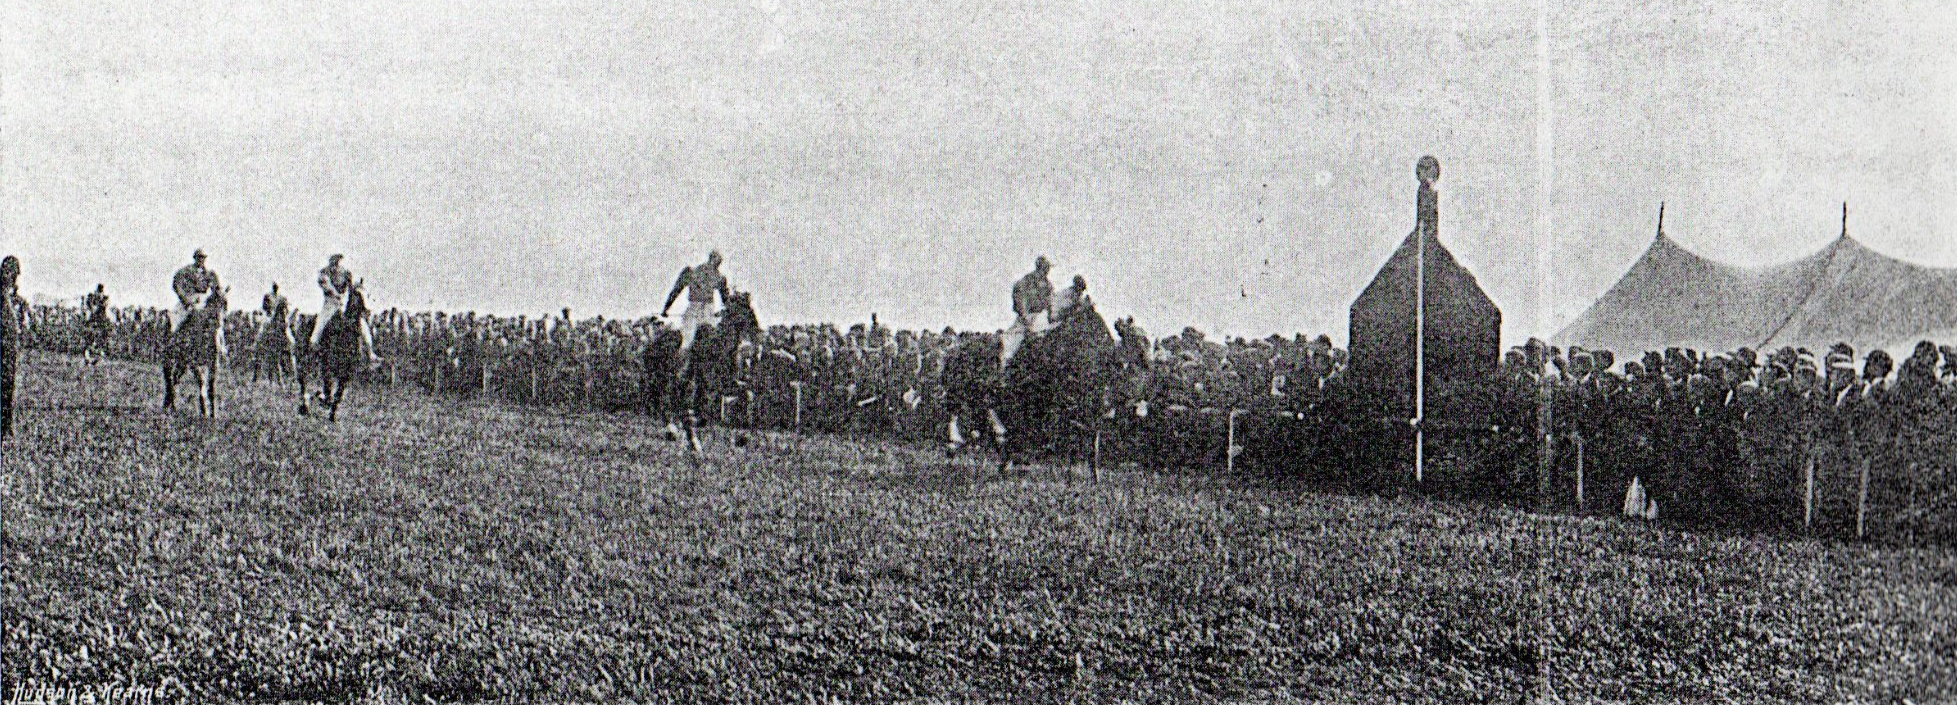 Tommy Loates, a legendary jockey, wins a race at Redcar in 1896 on Silver Fox